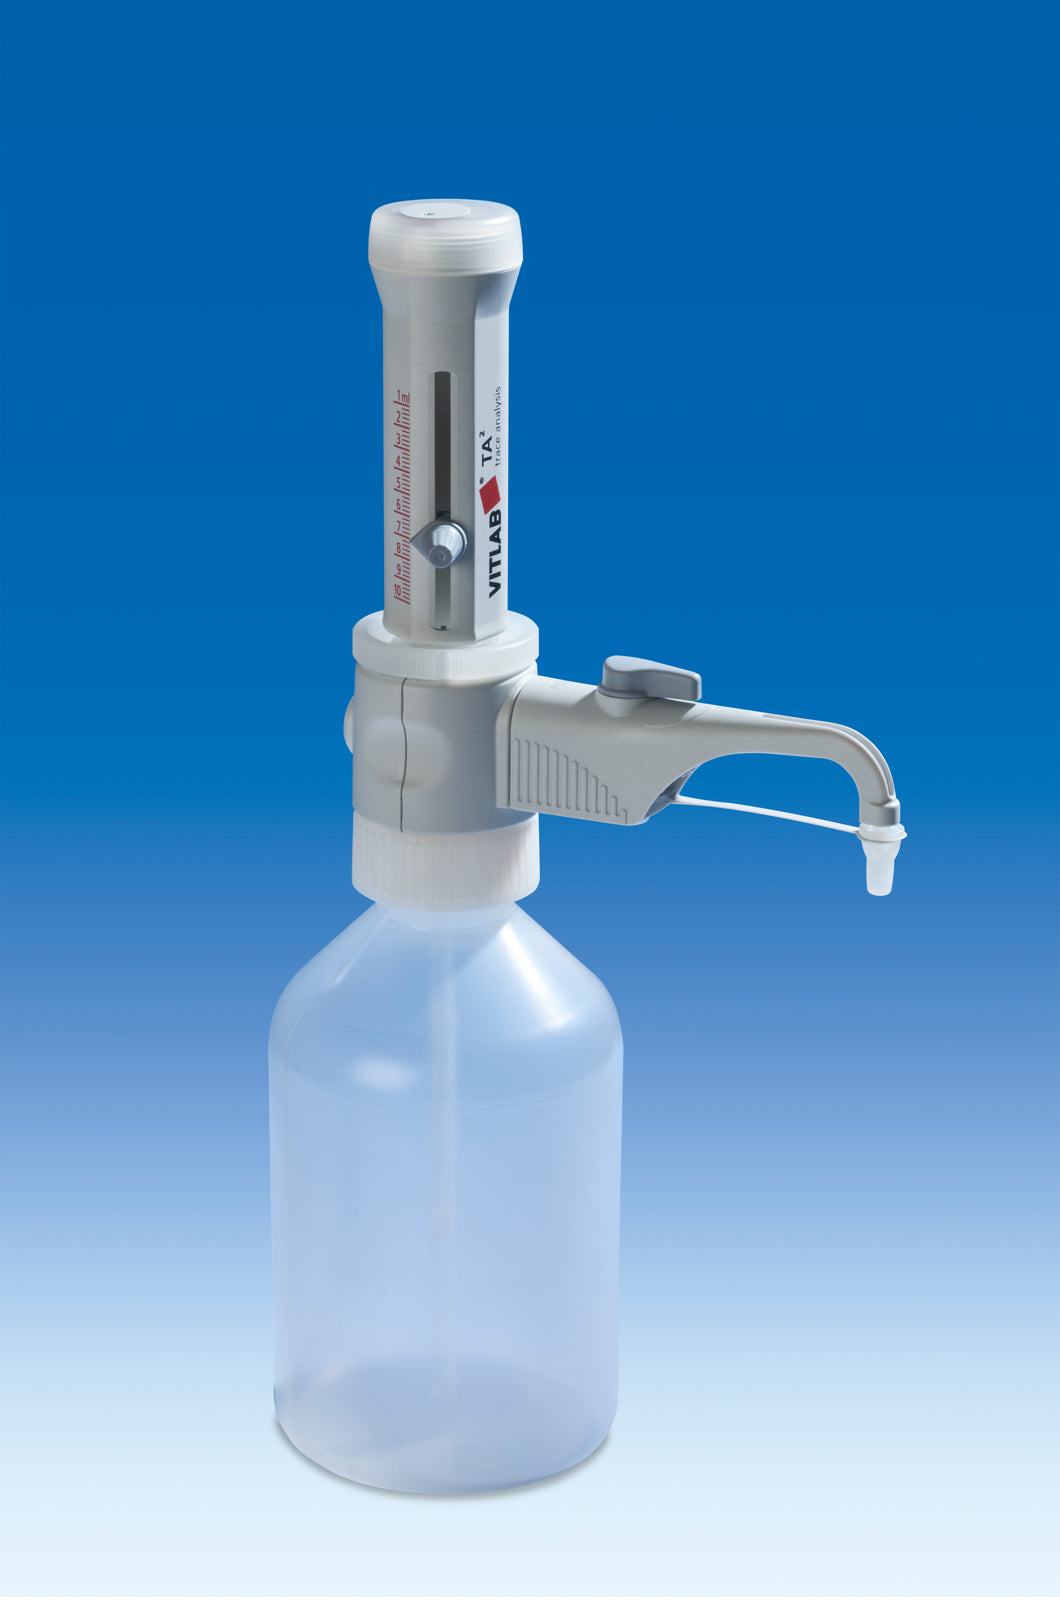 Dispenser VITLAB®TA² variabel, Volumen 1,0 - 10,0 ml, mit Tantal-Feder, mit Rückdosierventil